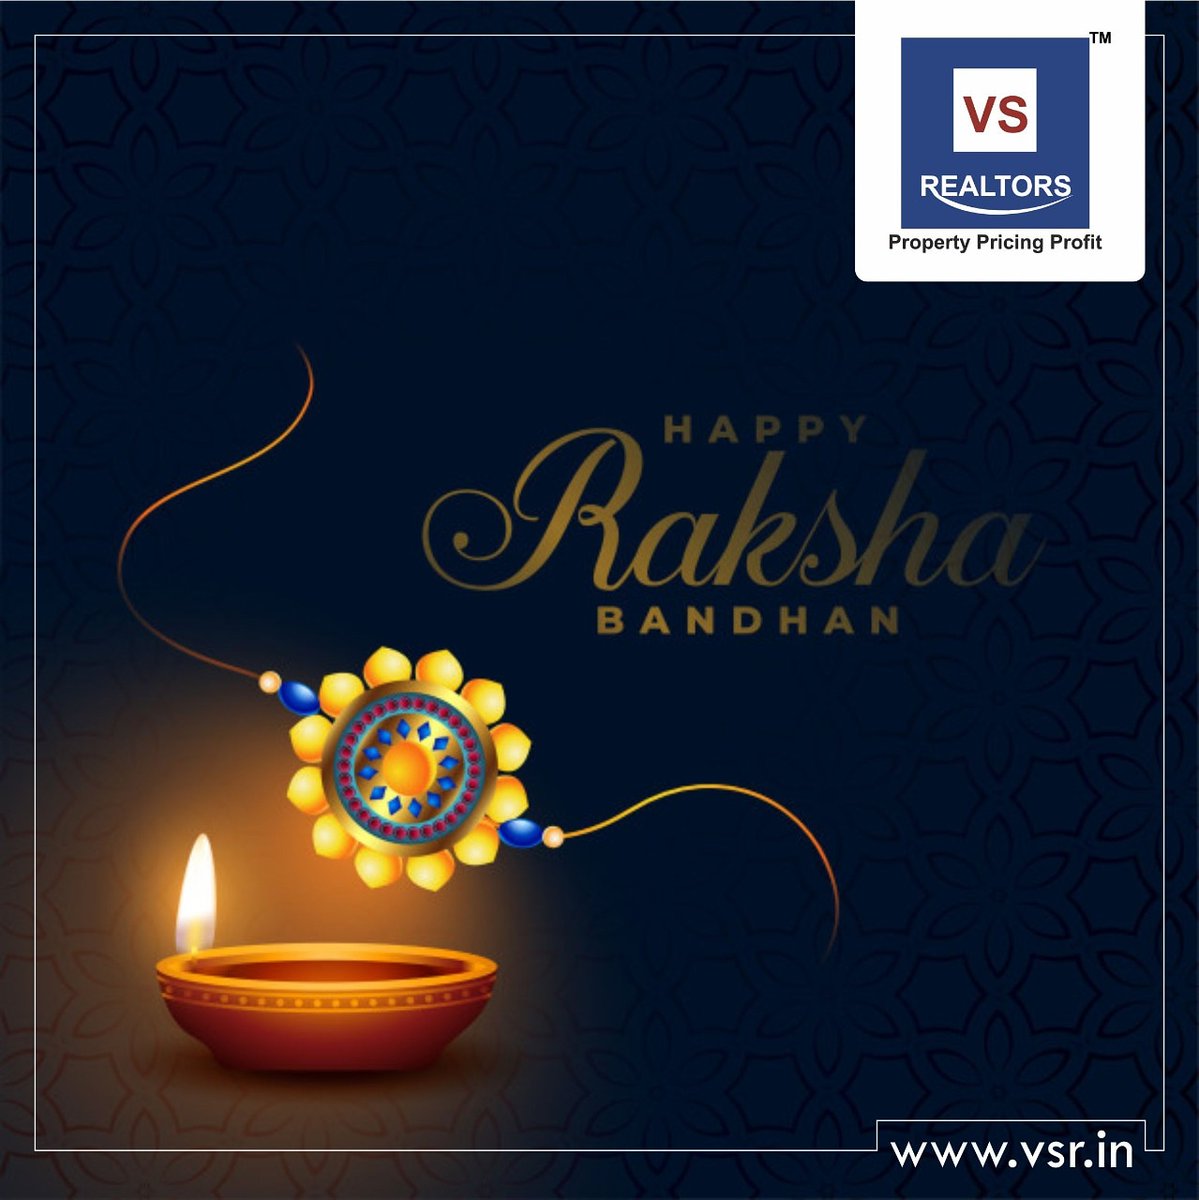 Happy Rakshabandhan!
#HappyRakhi #Brother #Rakshabandhan #VSRealtors #Realestatecompany #Gurgaon